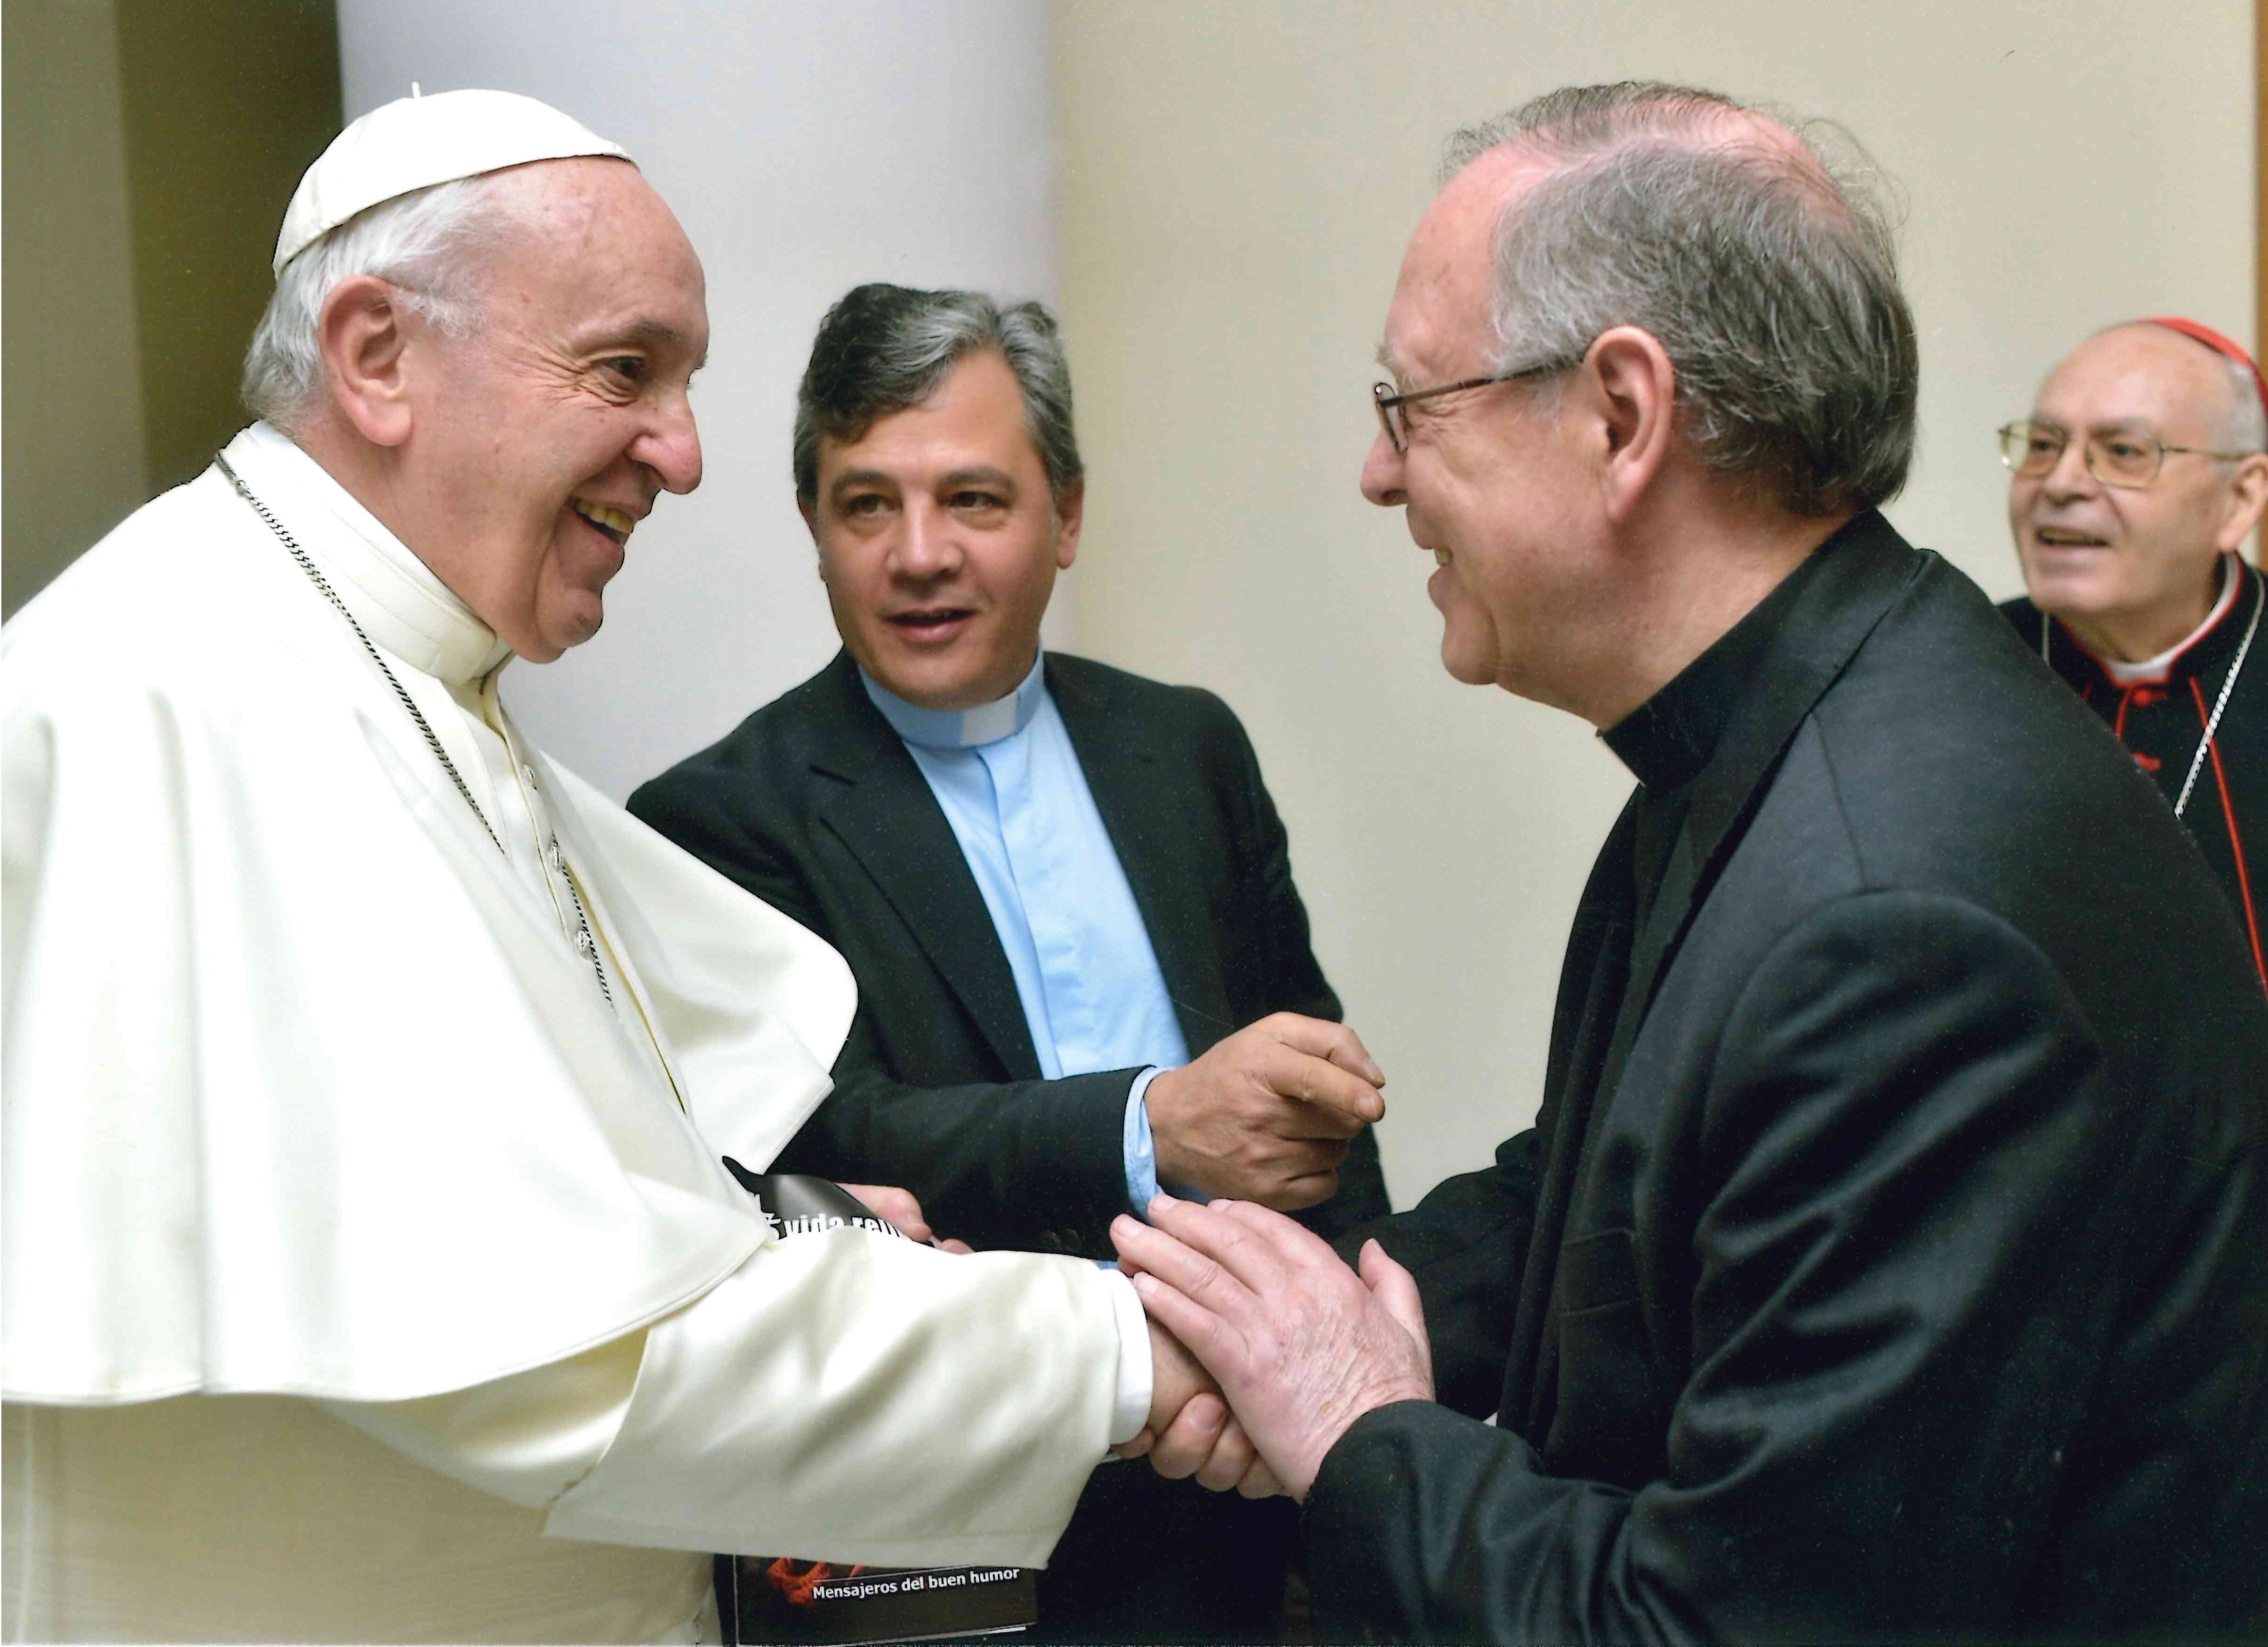 The Directors and Collaborators of Revista VIDA RELIGIOSA with Pope Francis